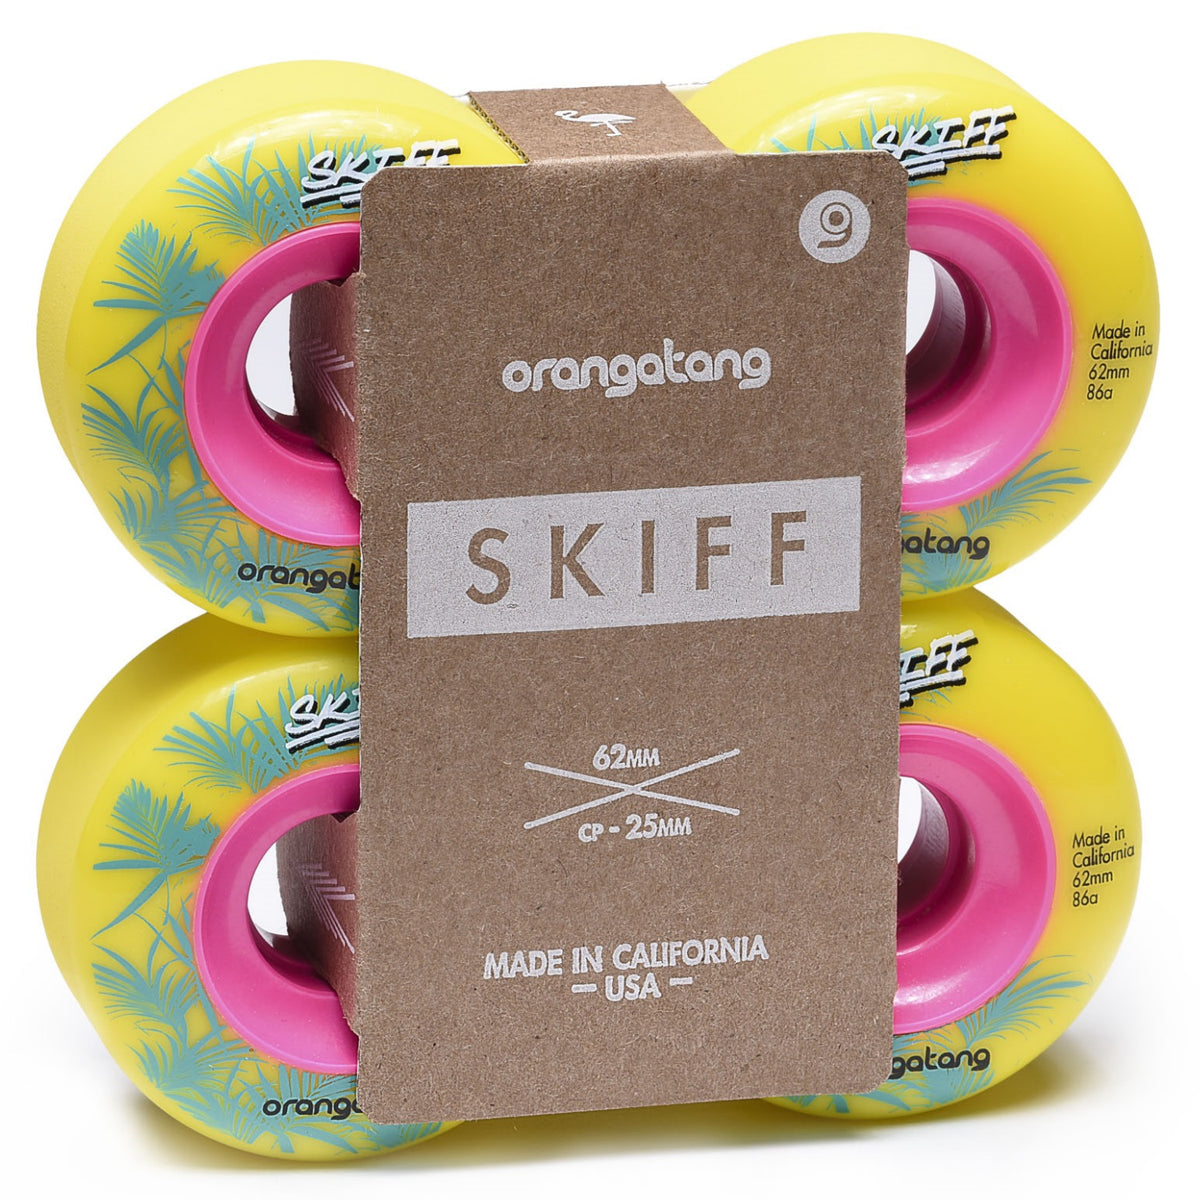 Orangatang Skiff Longboard Skateboard Wheels, 62mm